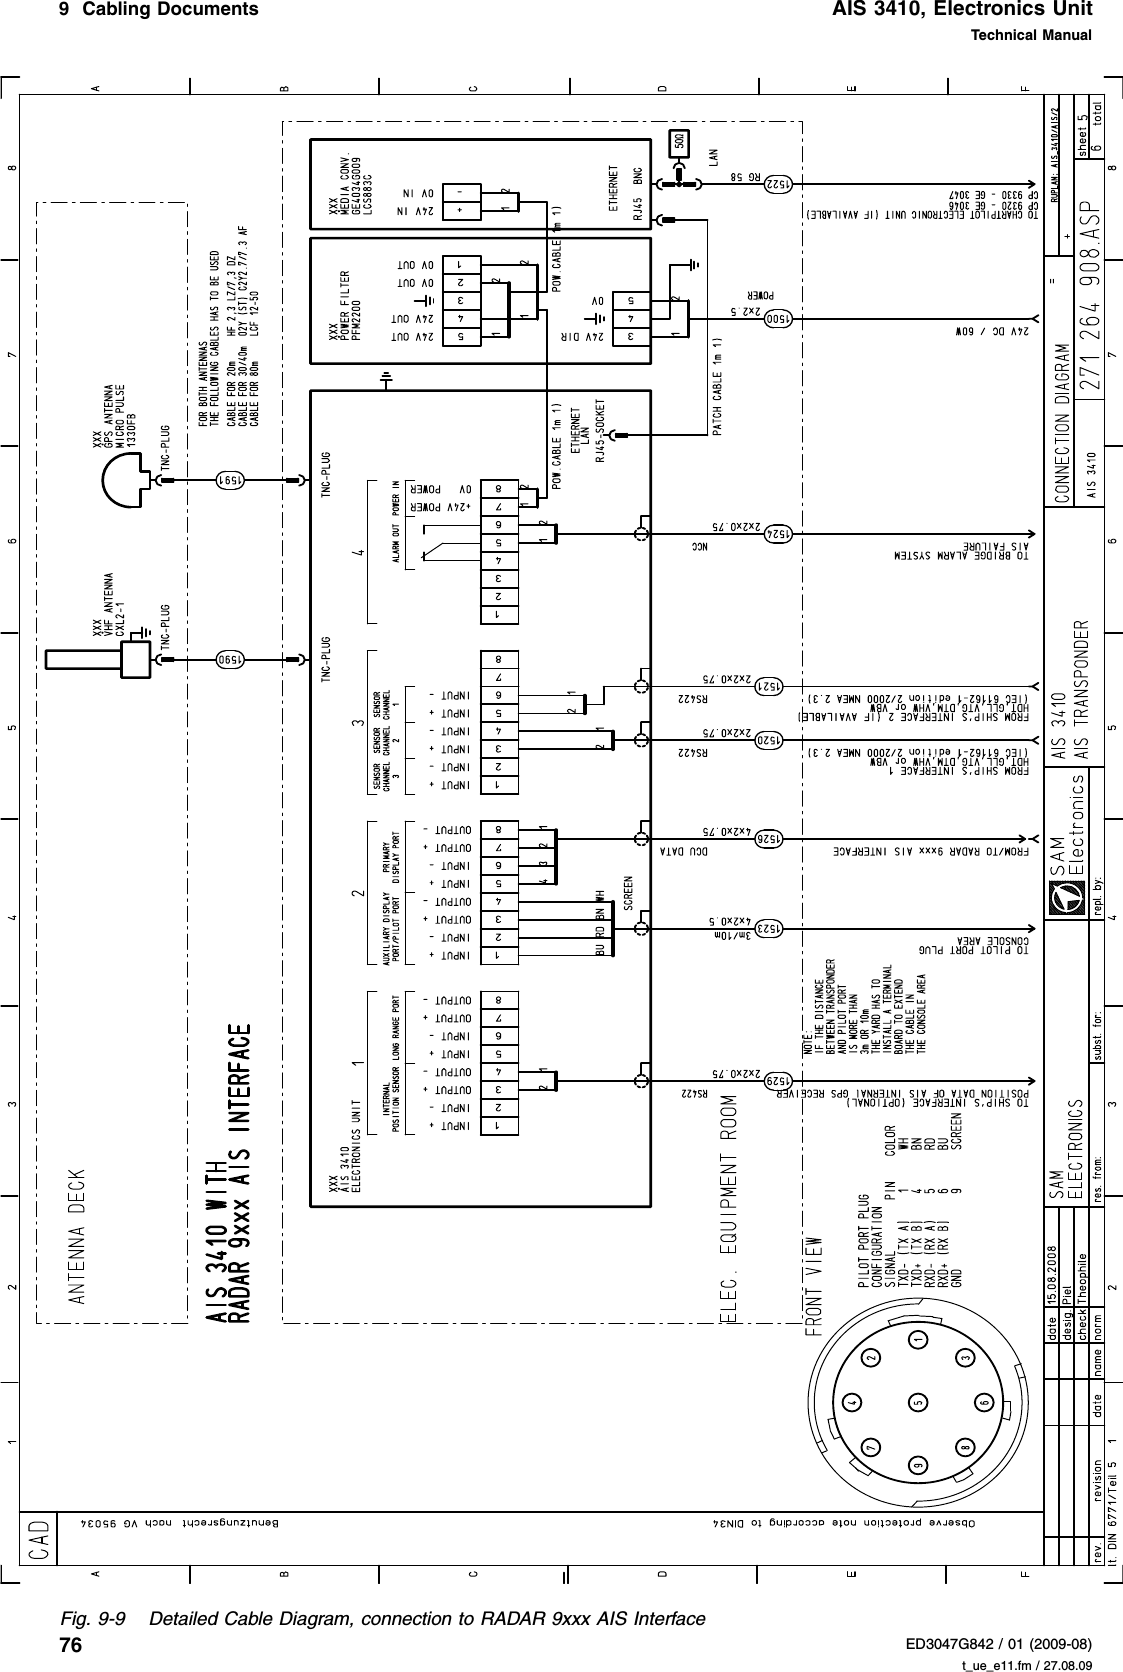 AIS 3410, Electronics UnitED3047G842 / 01 (2009-08)Technical Manual9  Cabling Documents   t_ue_e11.fm / 27.08.0976Fig. 9-9 Detailed Cable Diagram, connection to RADAR 9xxx AIS Interface